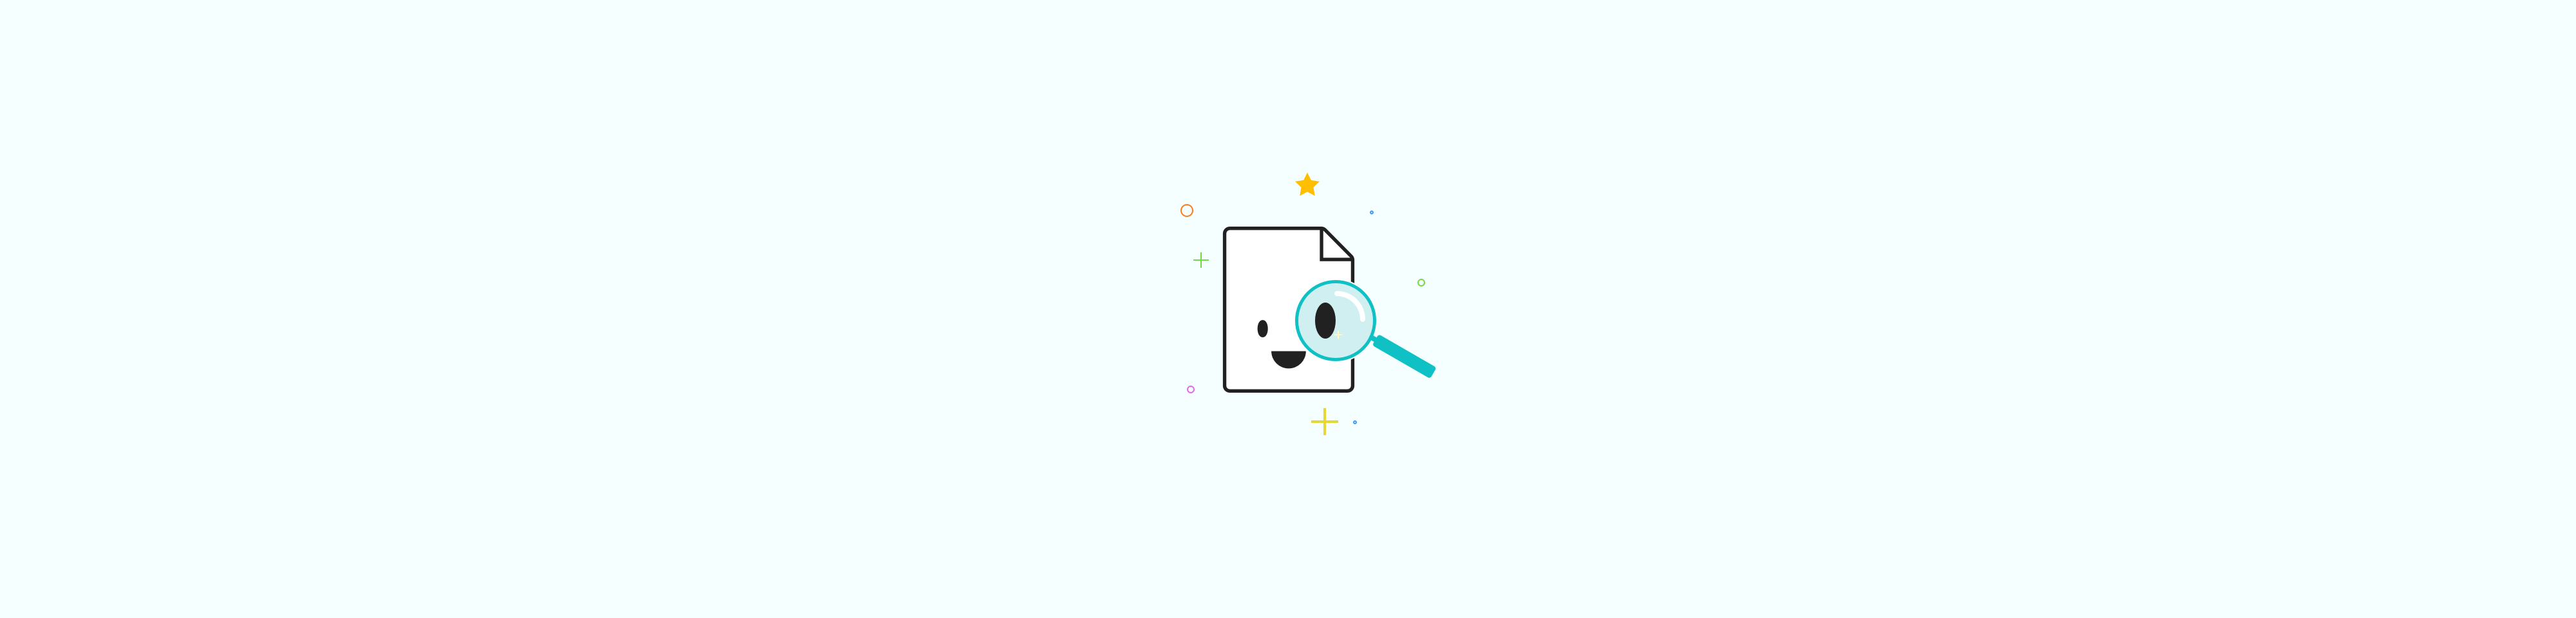 How to Type the Shrug Emoji ¯_(ツ)_/¯ in One Go  Smallpdf